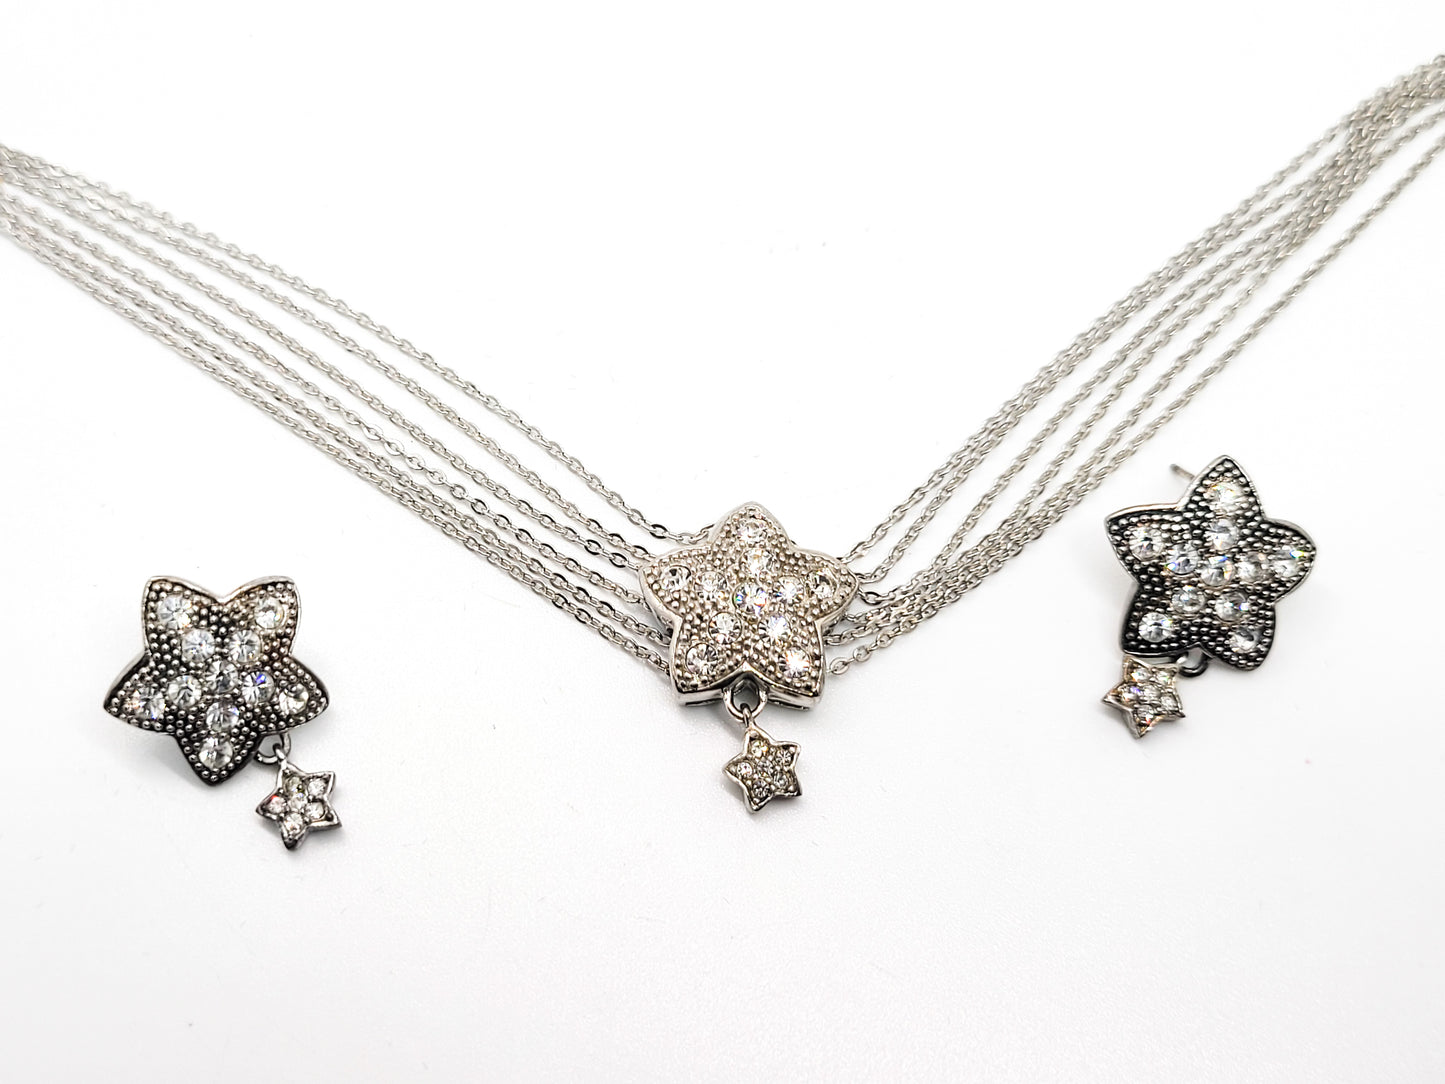 Dancing Star Pave rhinestone sterling silver multi strand bracelet and earrings demi set